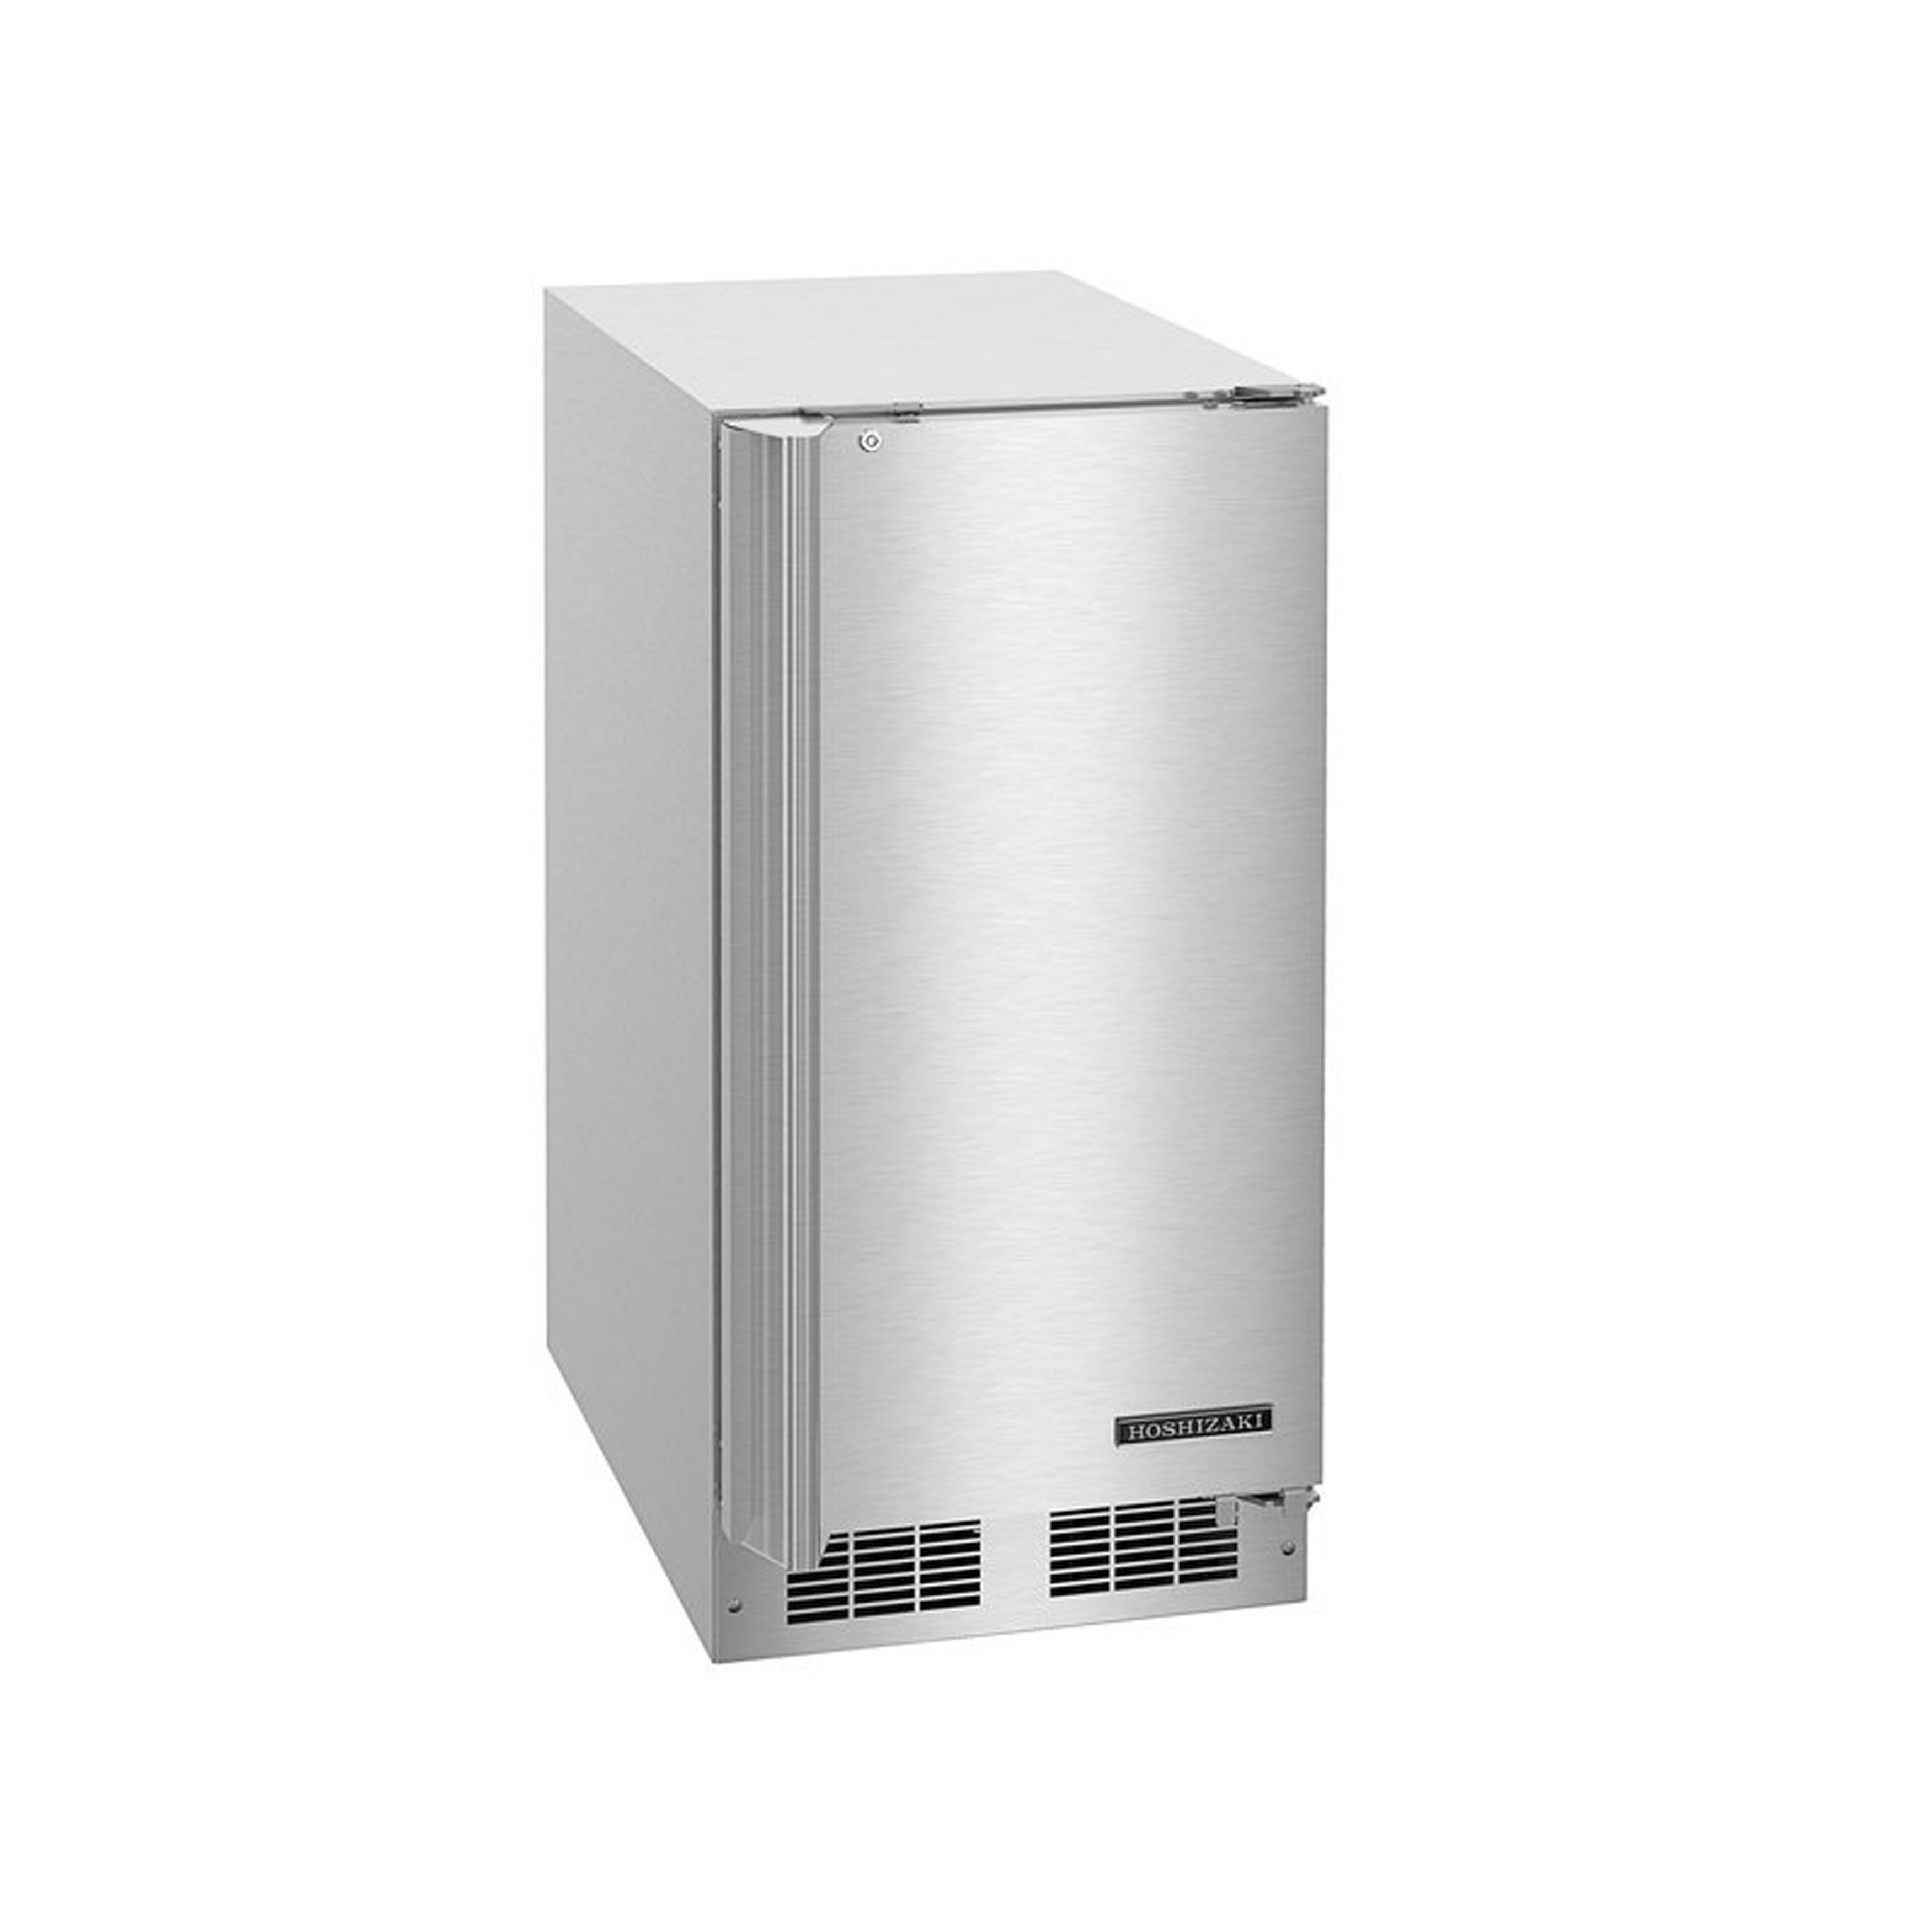 Hoshizaki - HR15A, Commercial 15" Undercounter Refrigerator 2.54 cu. ft.